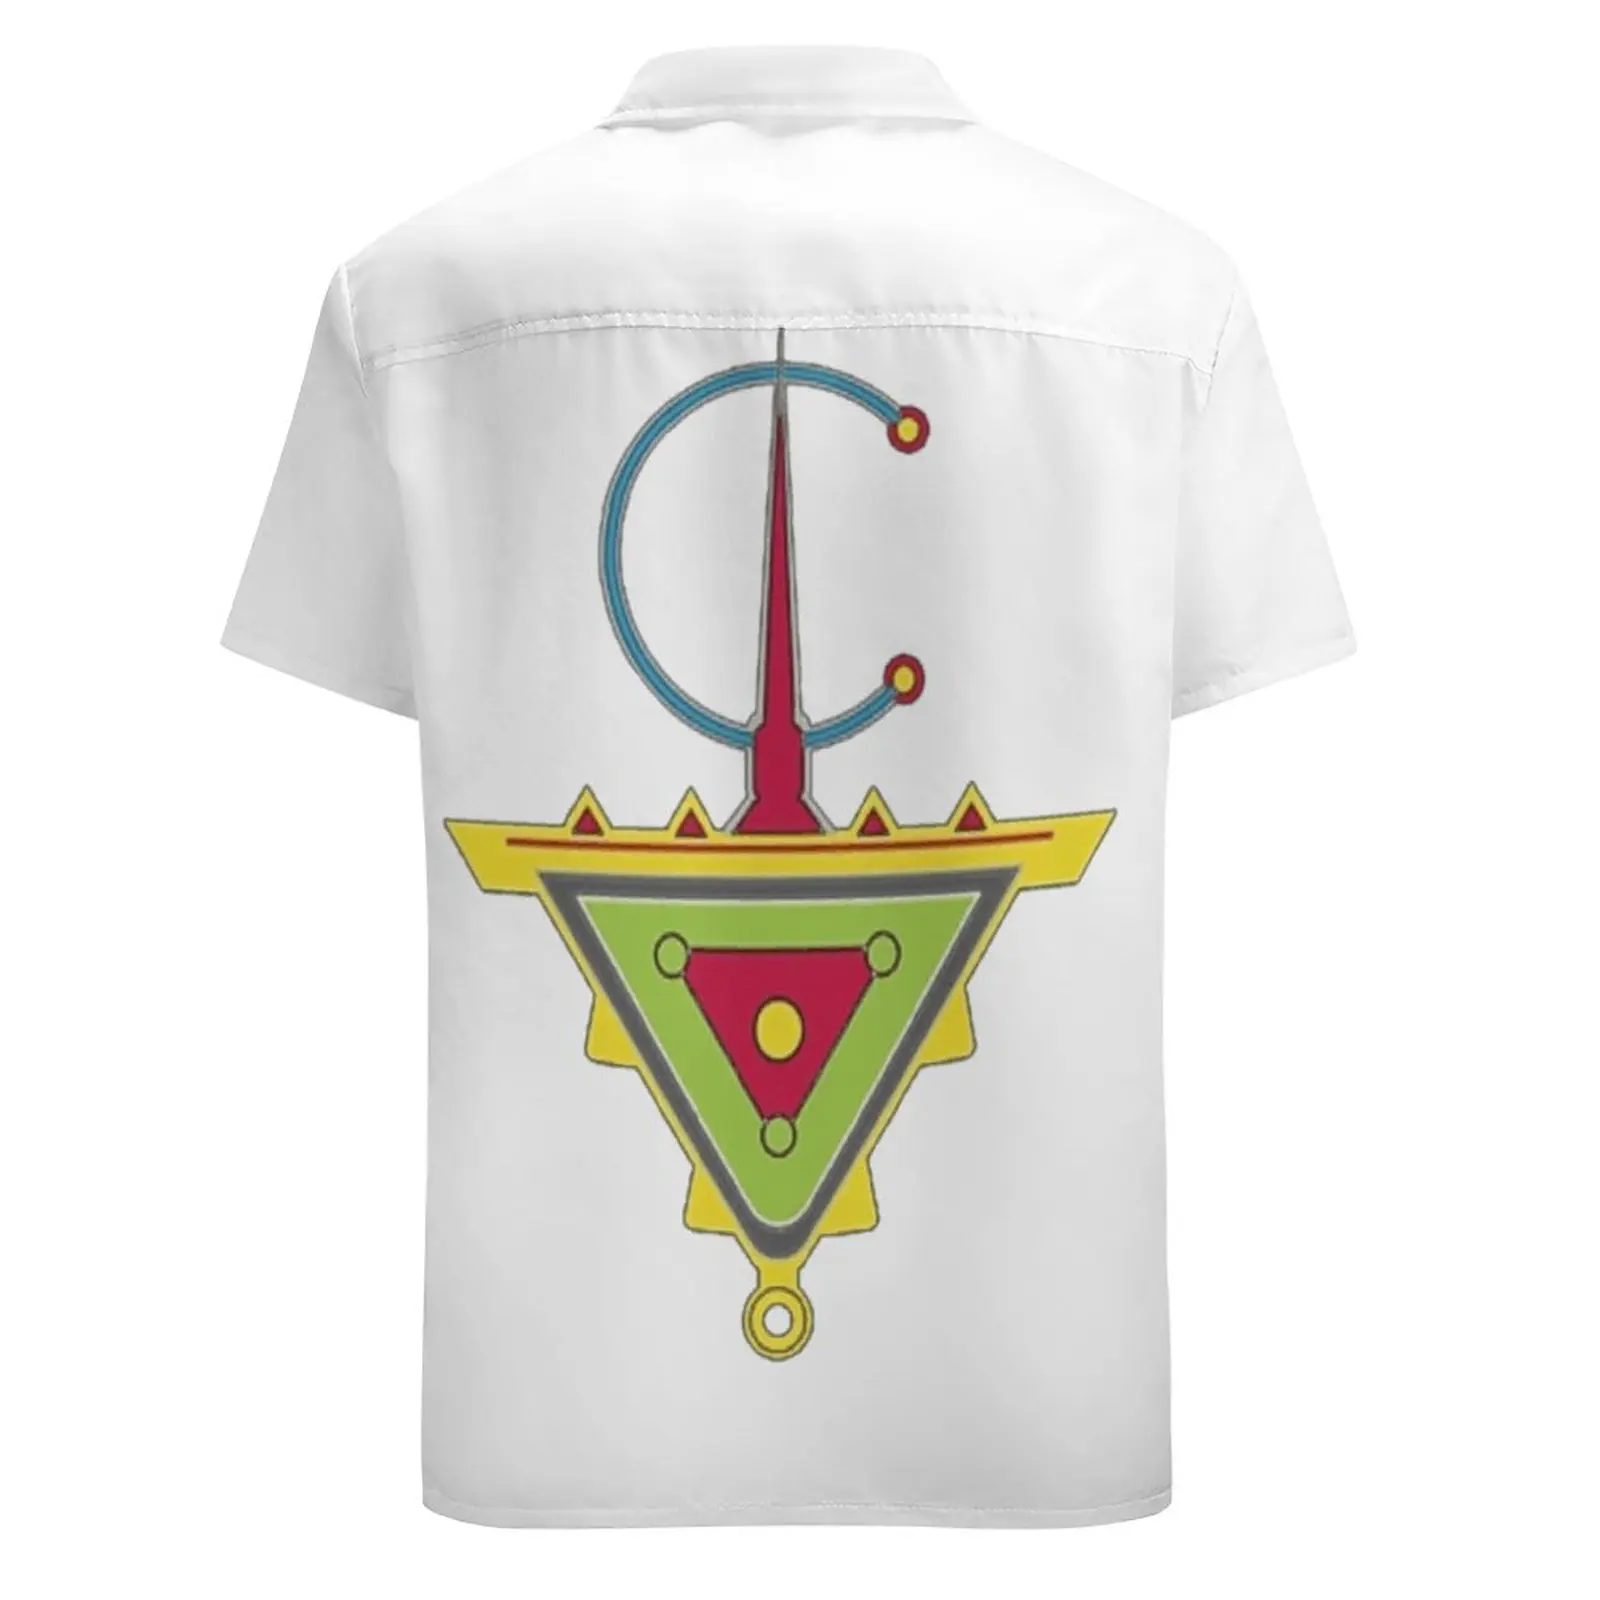 Amazigh Tazerzit Bereber Tazerzit Tiseghnas Camiseta Divertido Traje de la Vendimia Una Camisa de Manga Corta Beach, estados UNIDOS de Tamaño